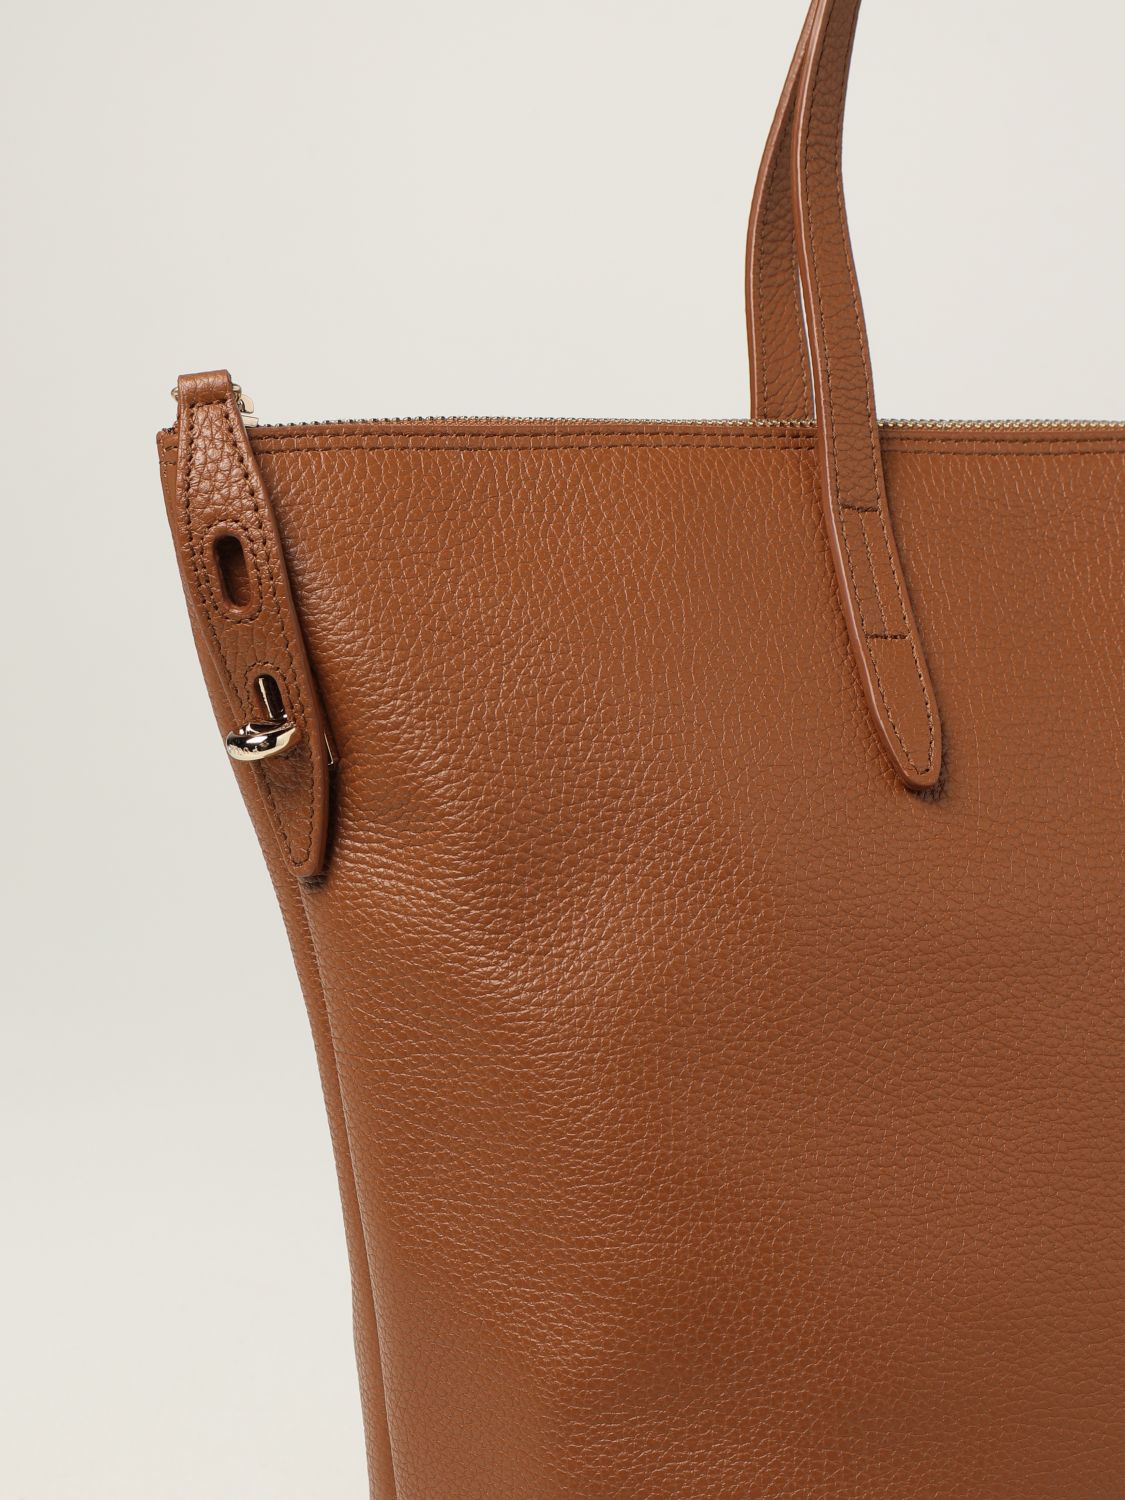 FURLA FURLA NET L TOTE, Brown Women's Handbag